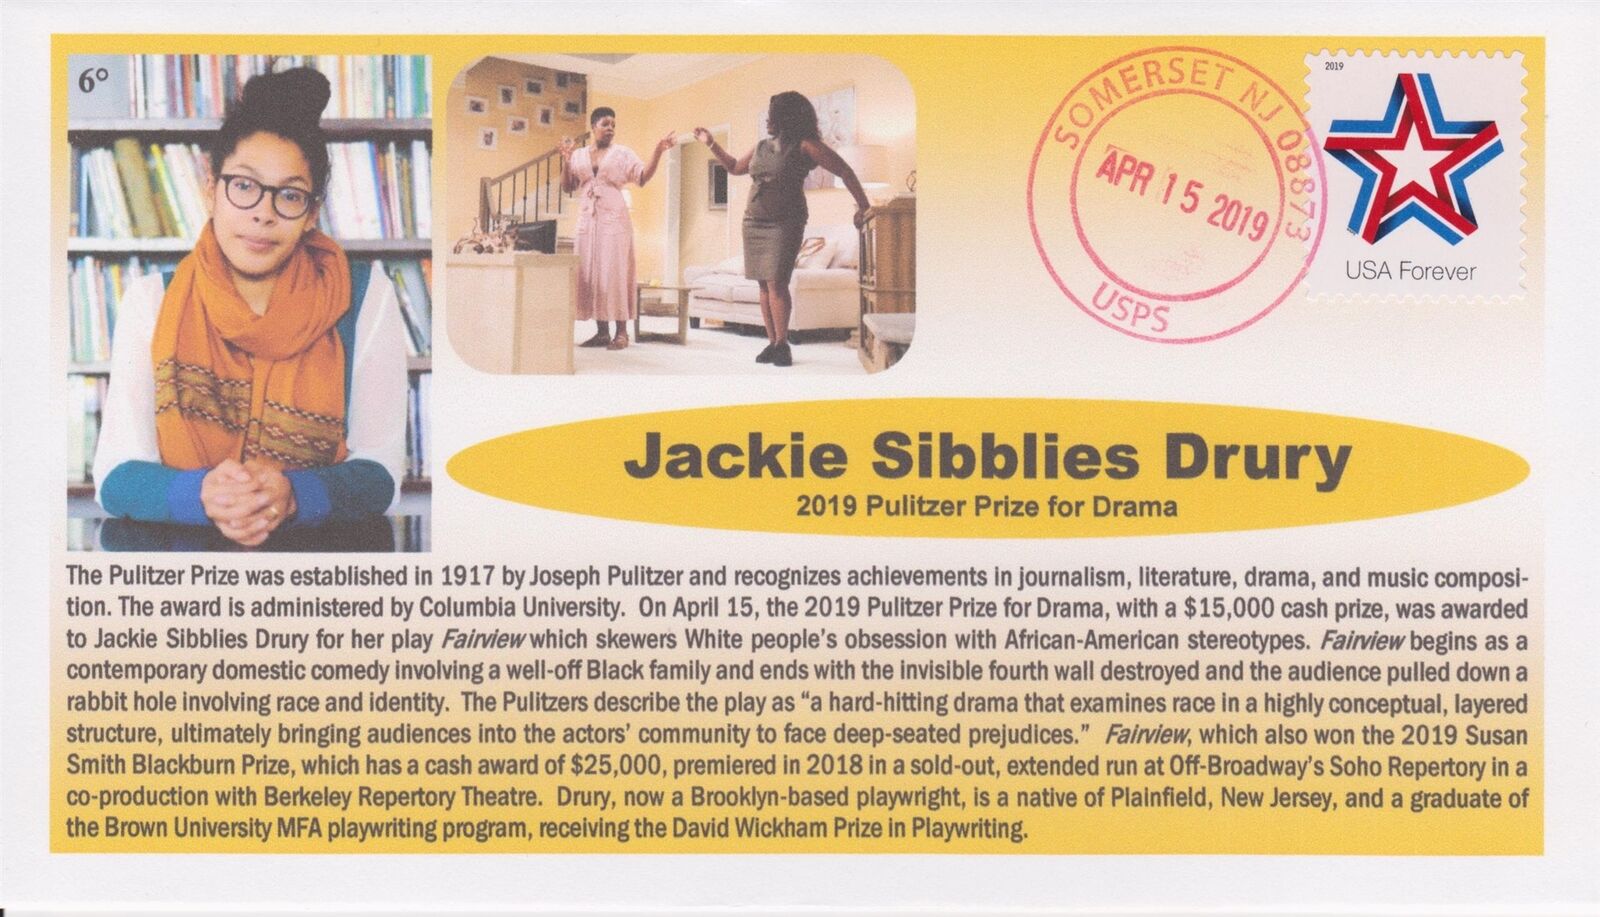 6° Cachets Pulitzer Prize 2019 Jackie Sibblies Drury Drama Fairview 